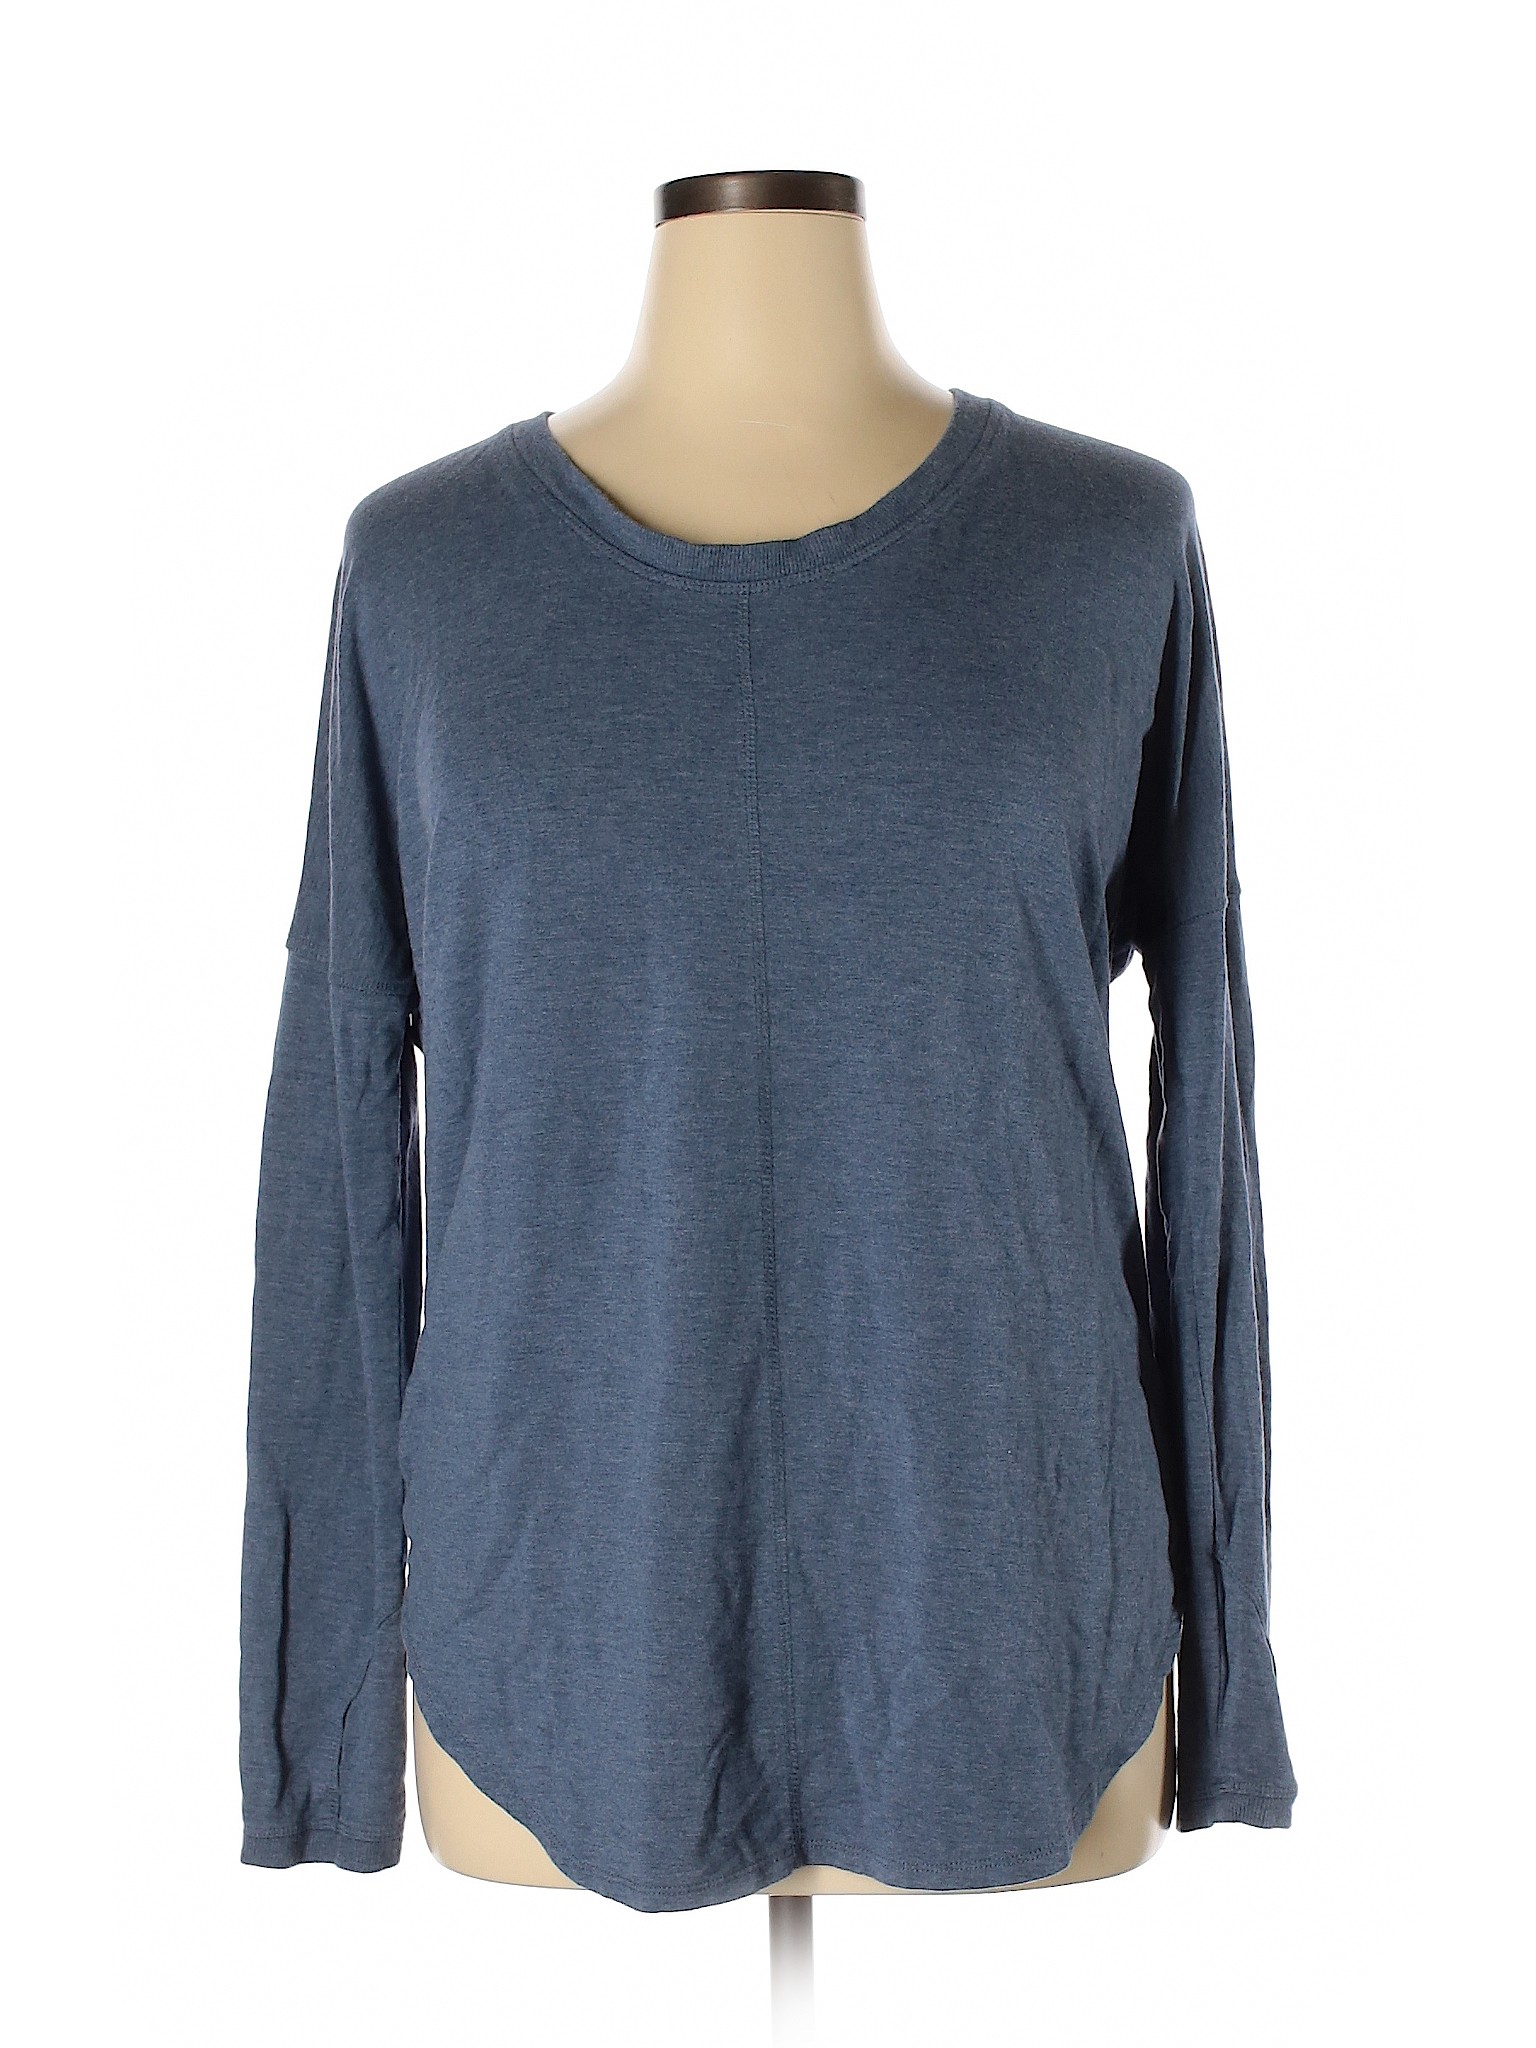 PREMISE Women Blue Pullover Sweater XL | eBay